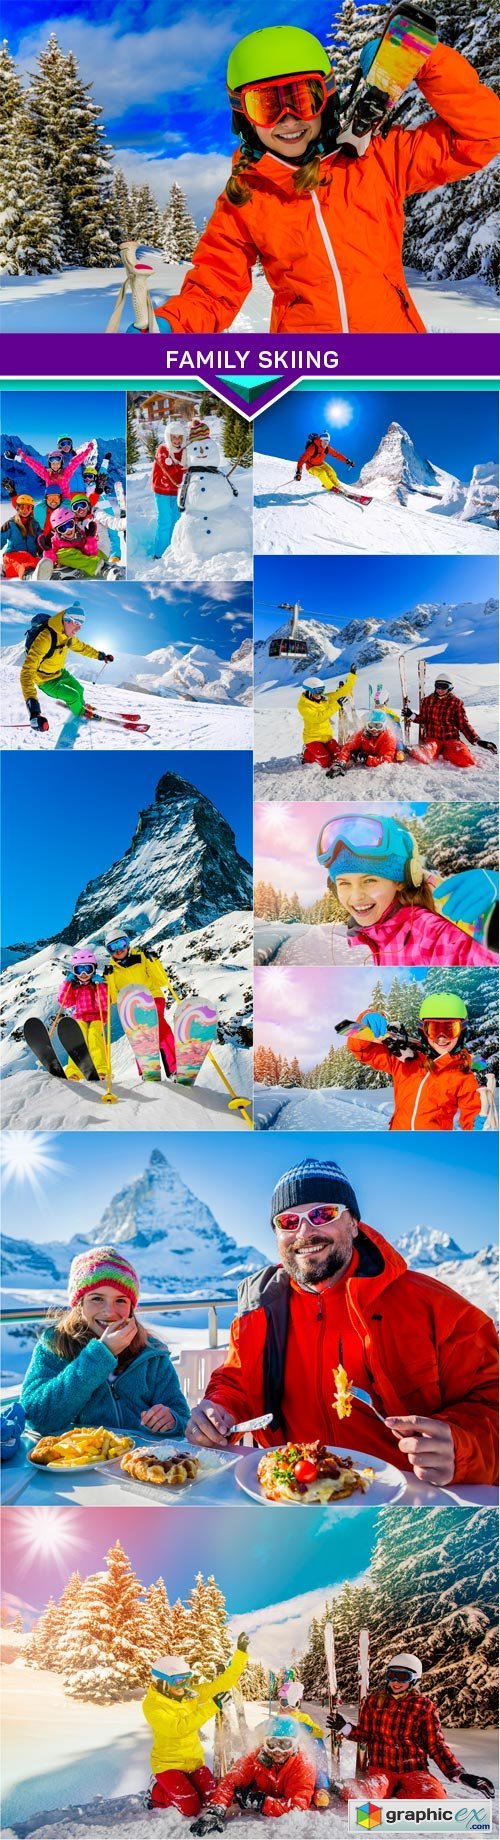 Family skiing 11x JPEG